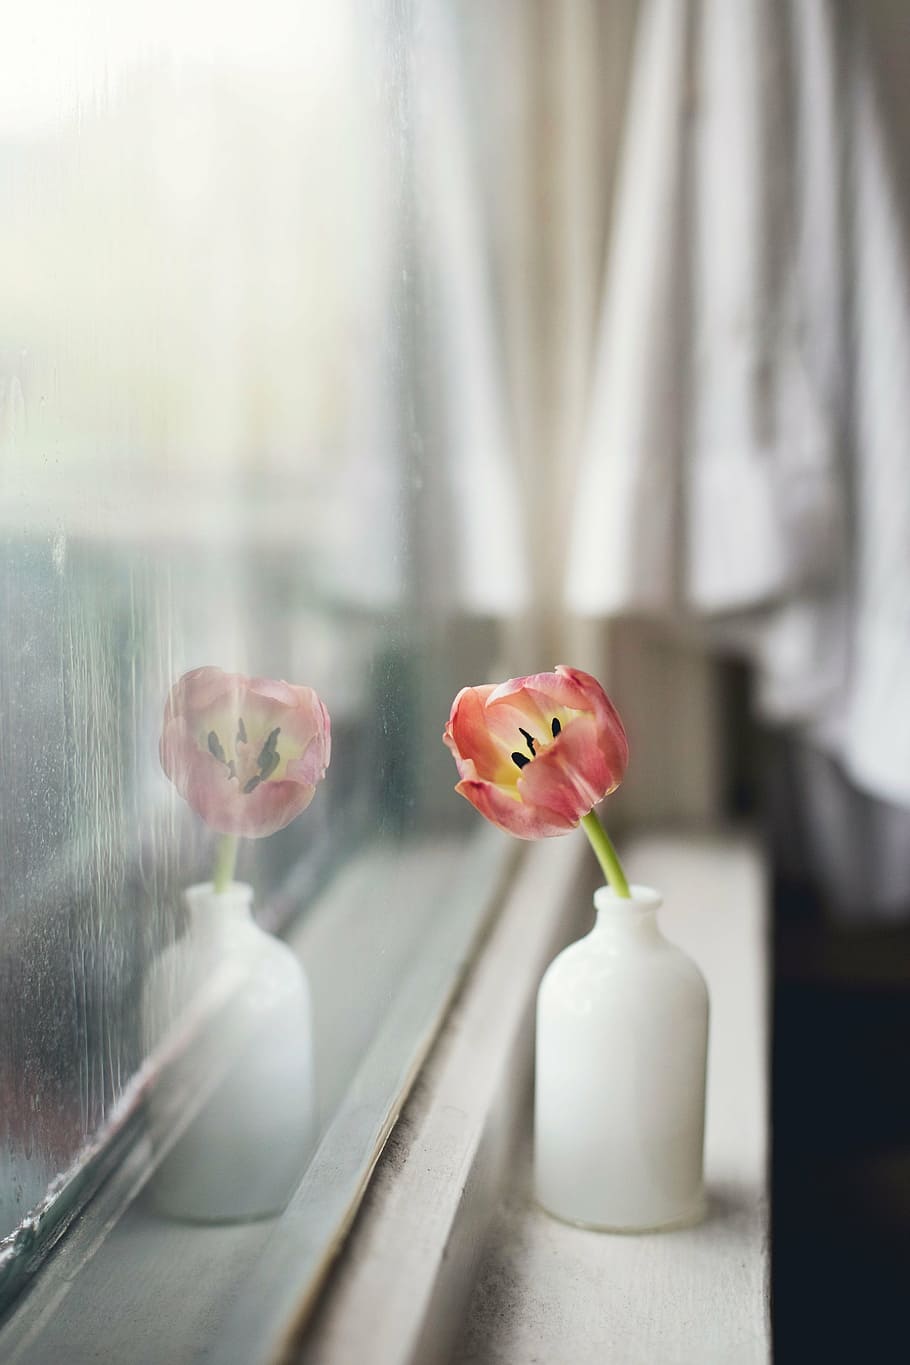 pink, tulip flower, white, vase, flower, interior, display, window, glass, bedroom